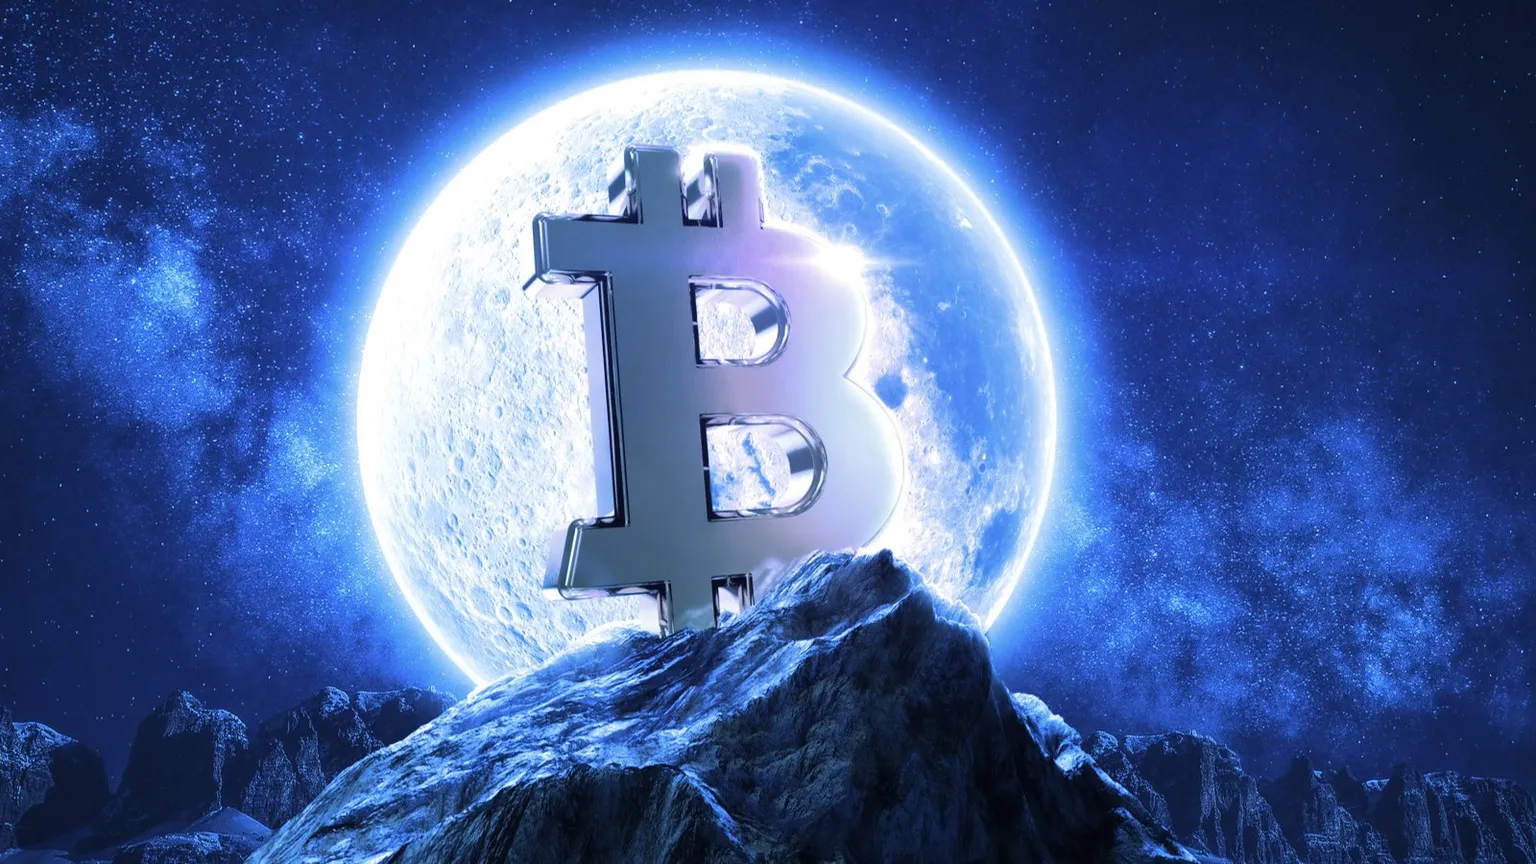 Bitcoin's moon. Image: Shutterstock